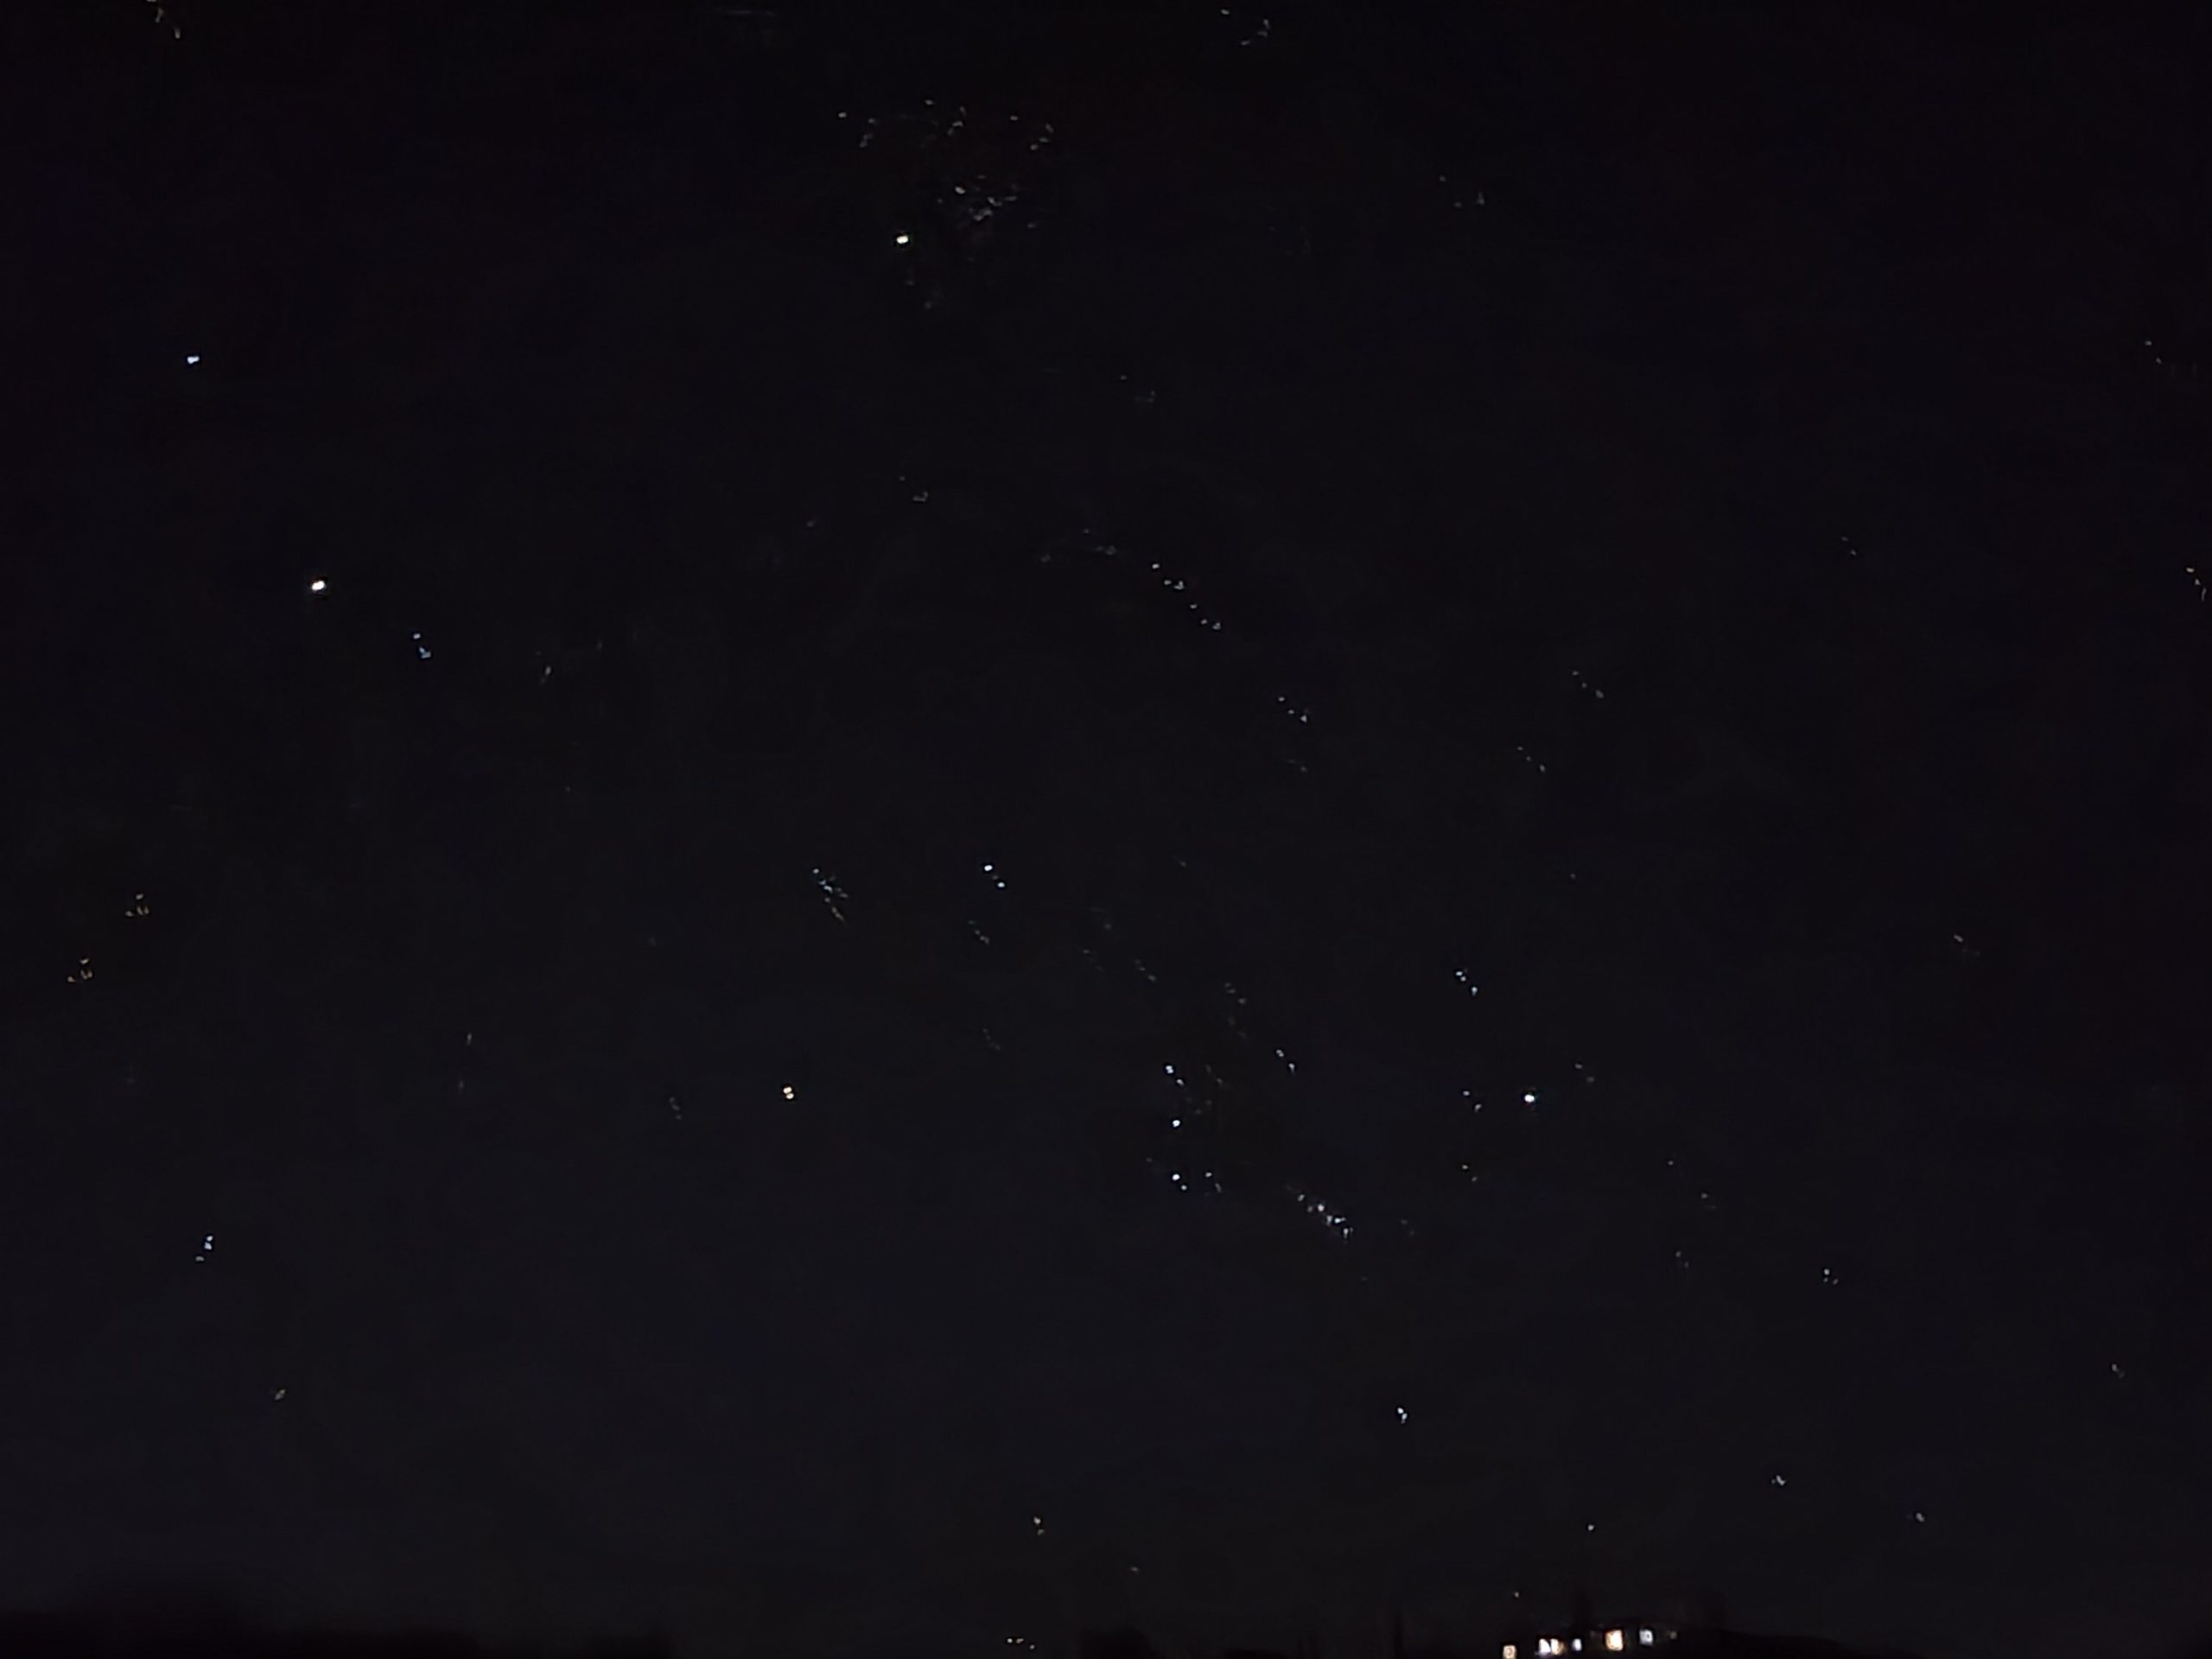 Orion graces Cassiopeia stargazing